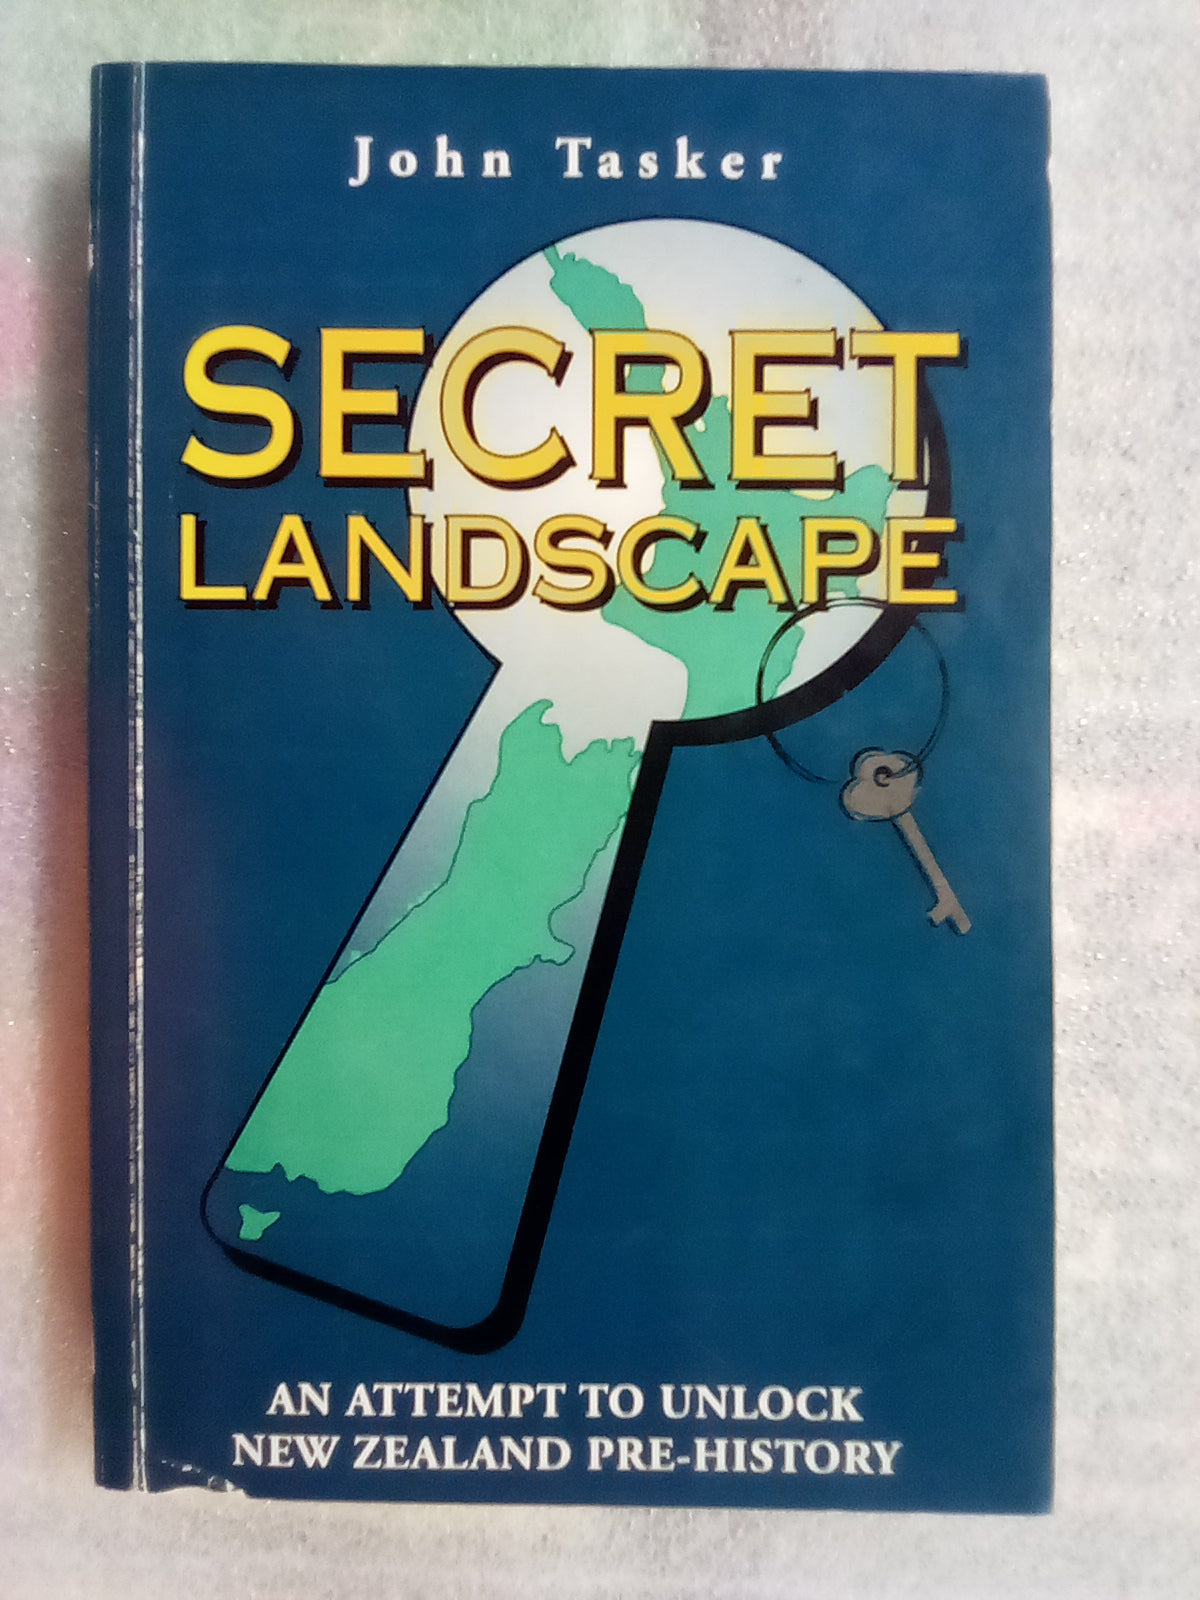 Secret landscape - New Zealand Pre-History by John Tasker